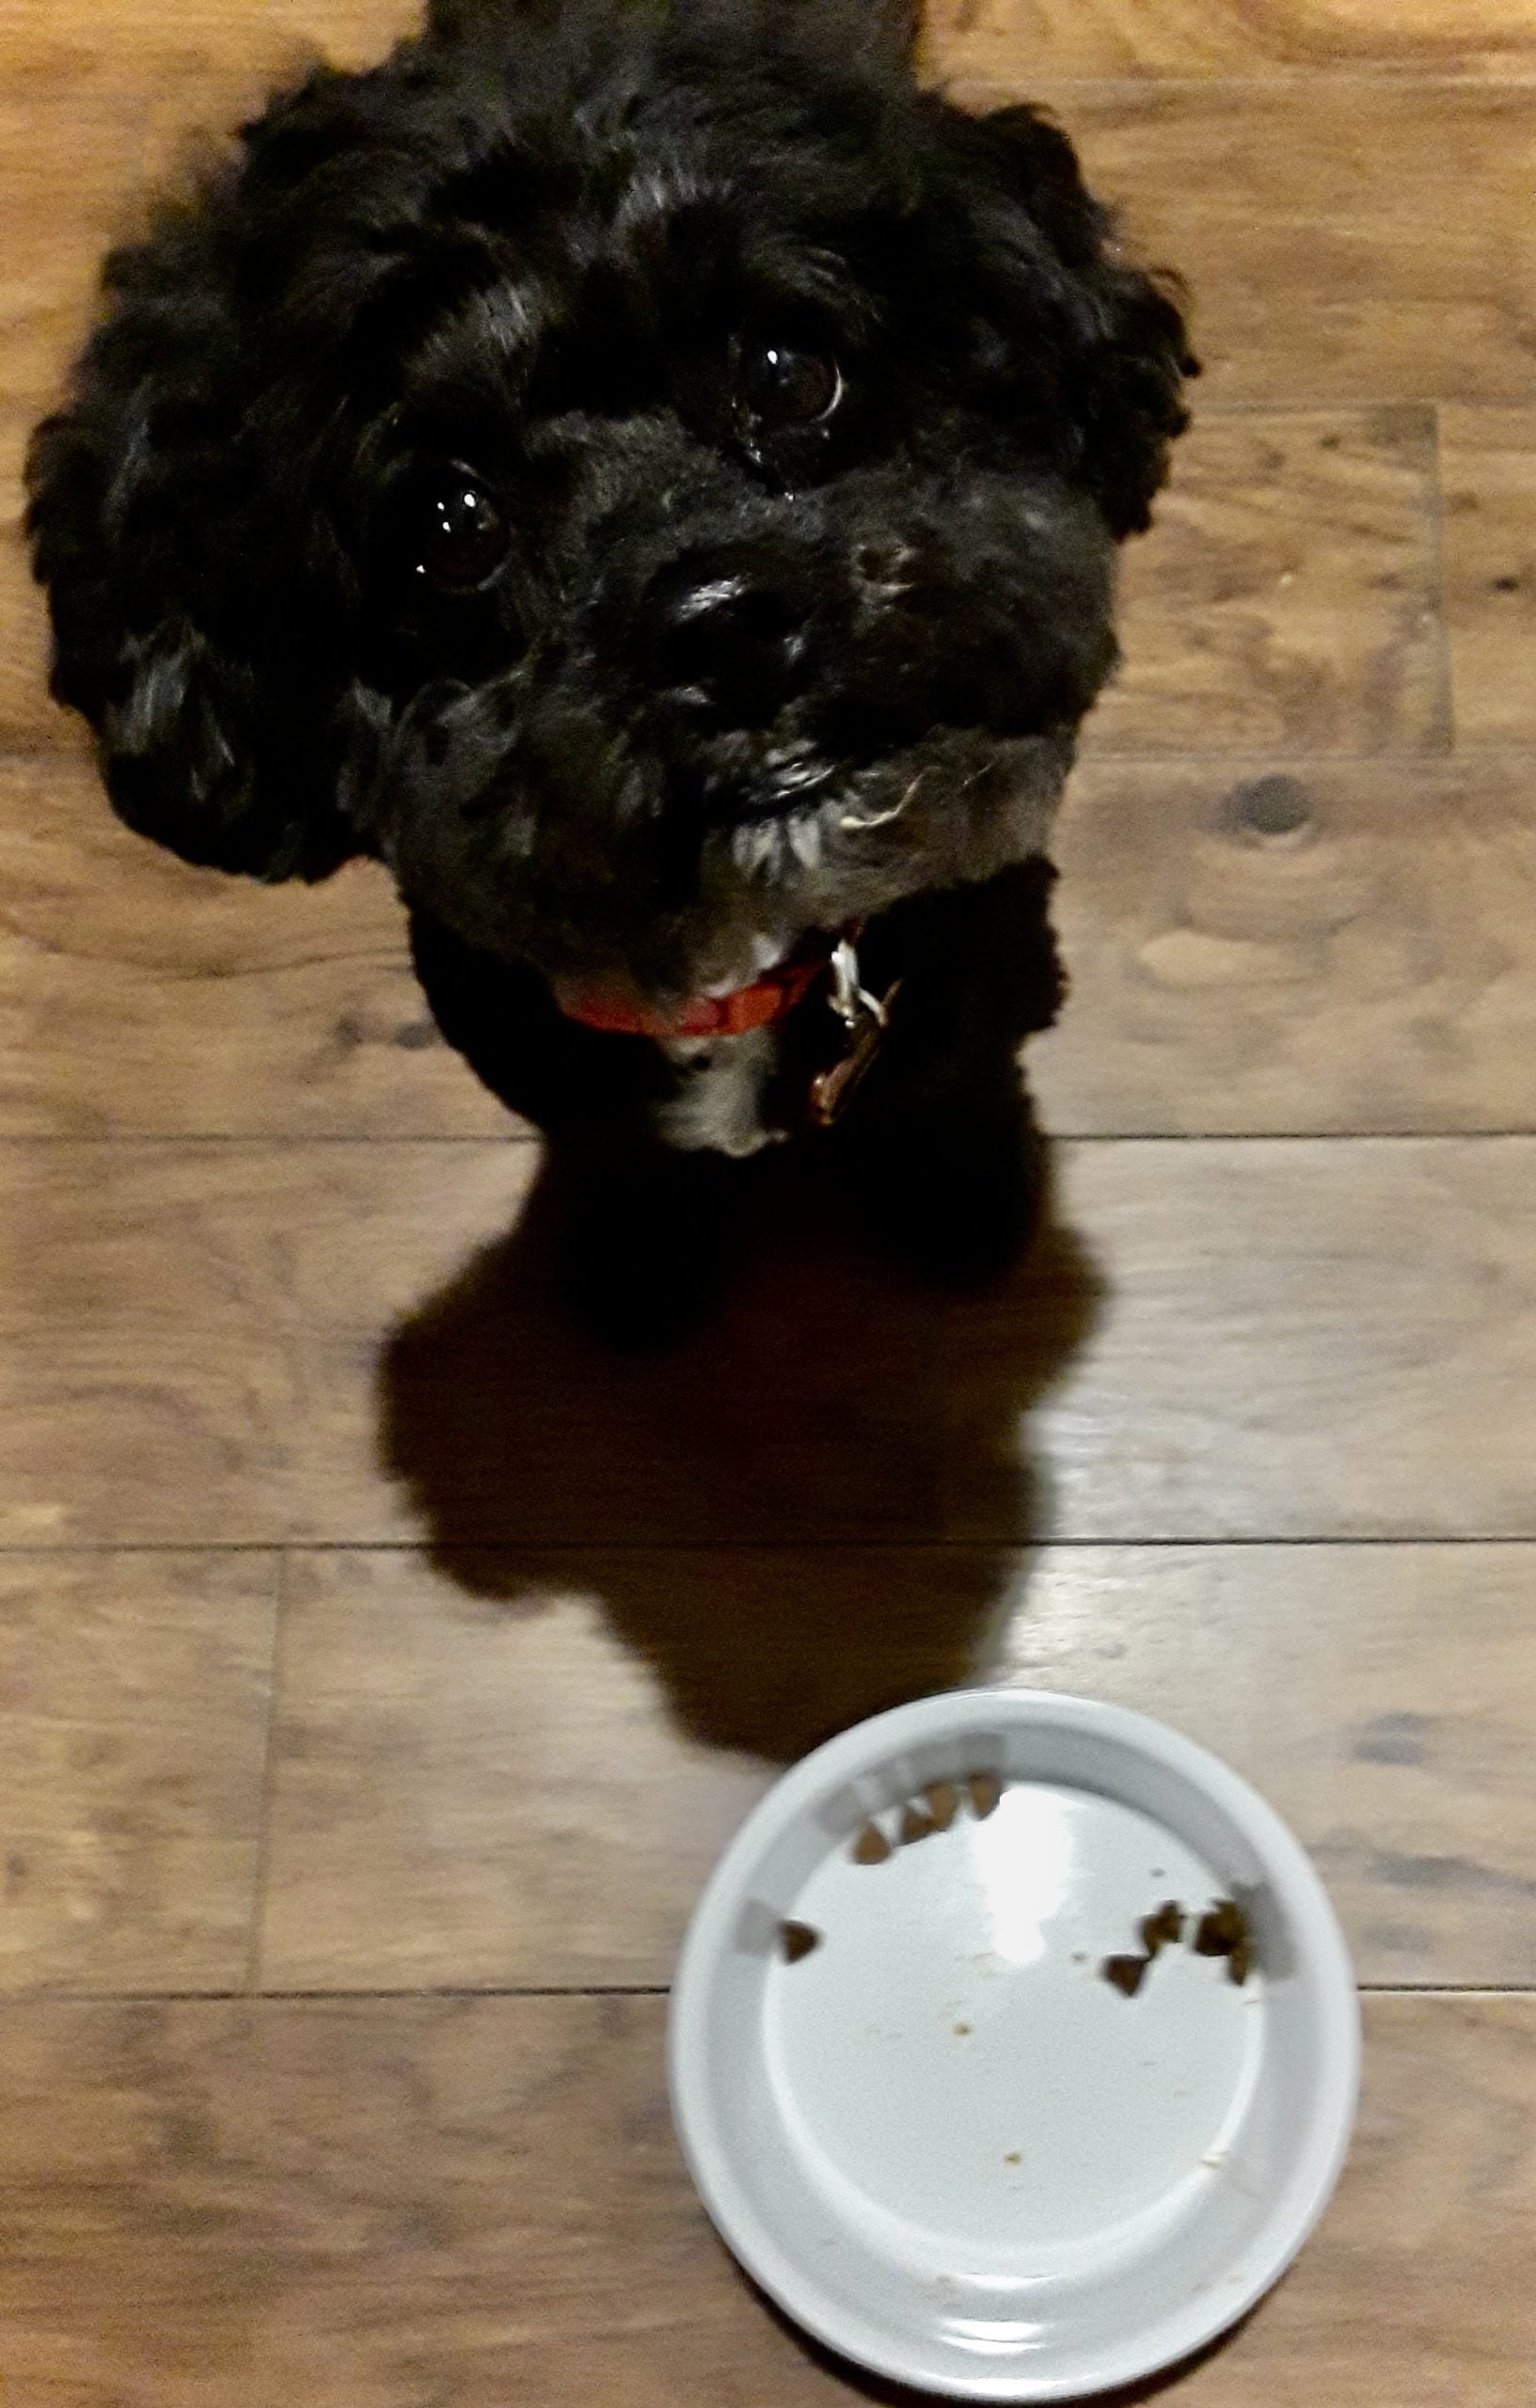 Henry enjoys quality dog food benefits. 